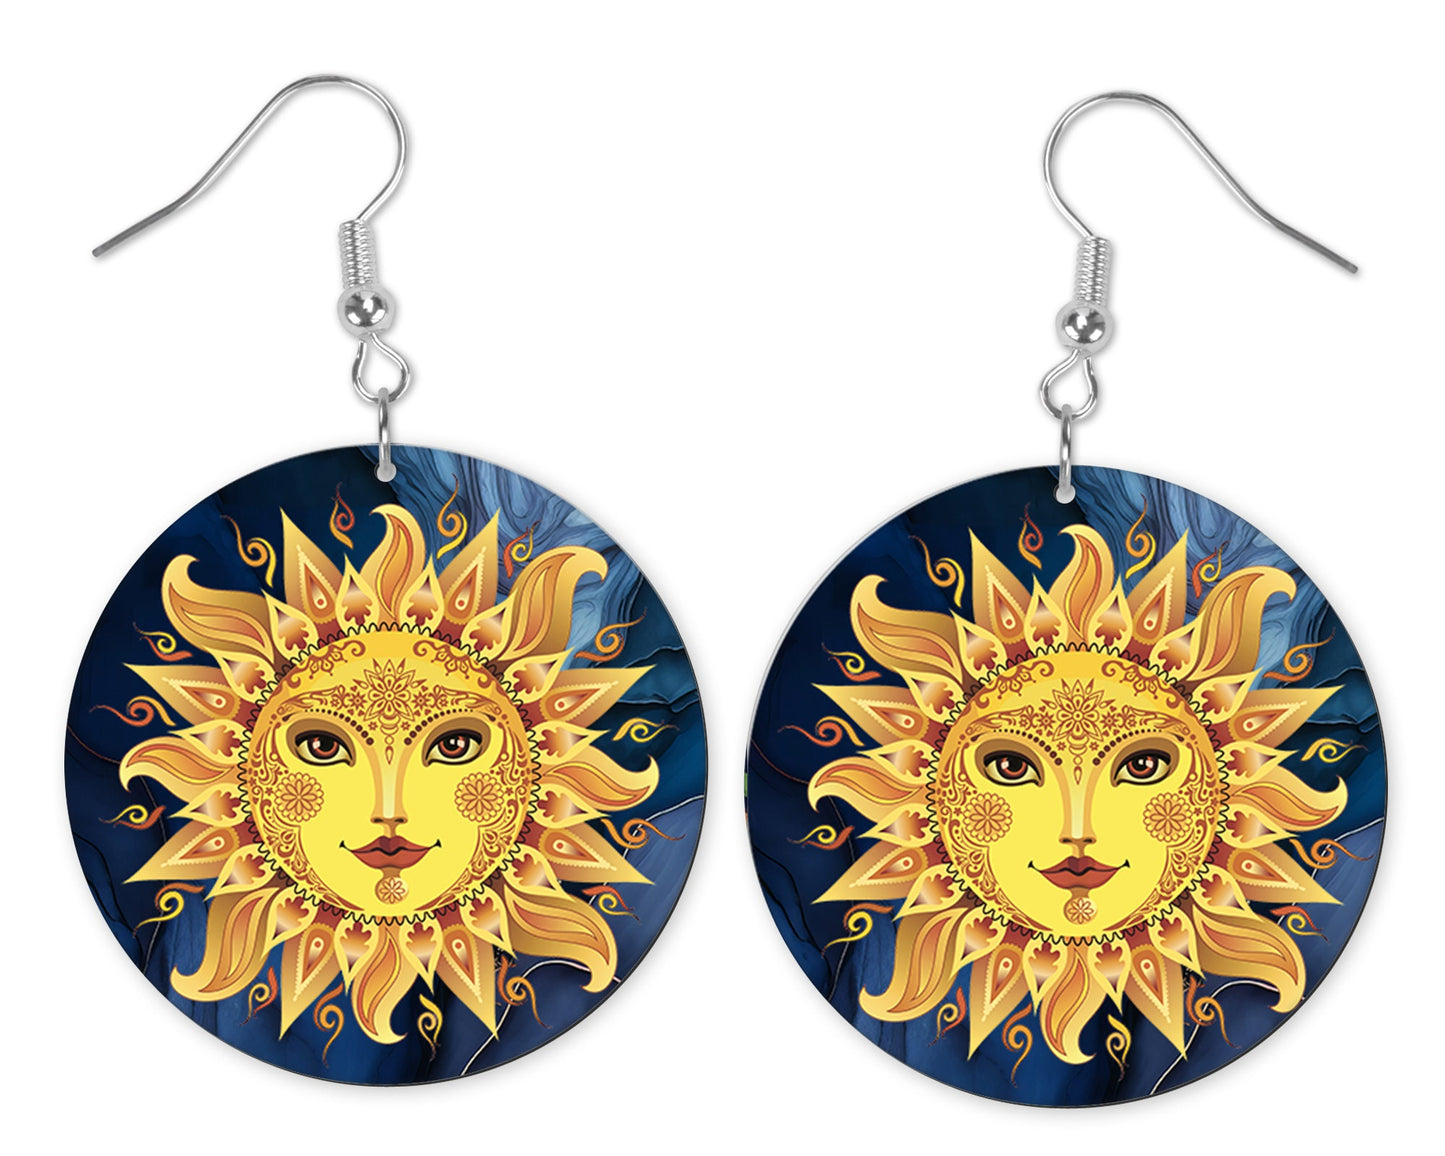 Celestial Sun Round Printed Wood Earrings Handmade Jewelry